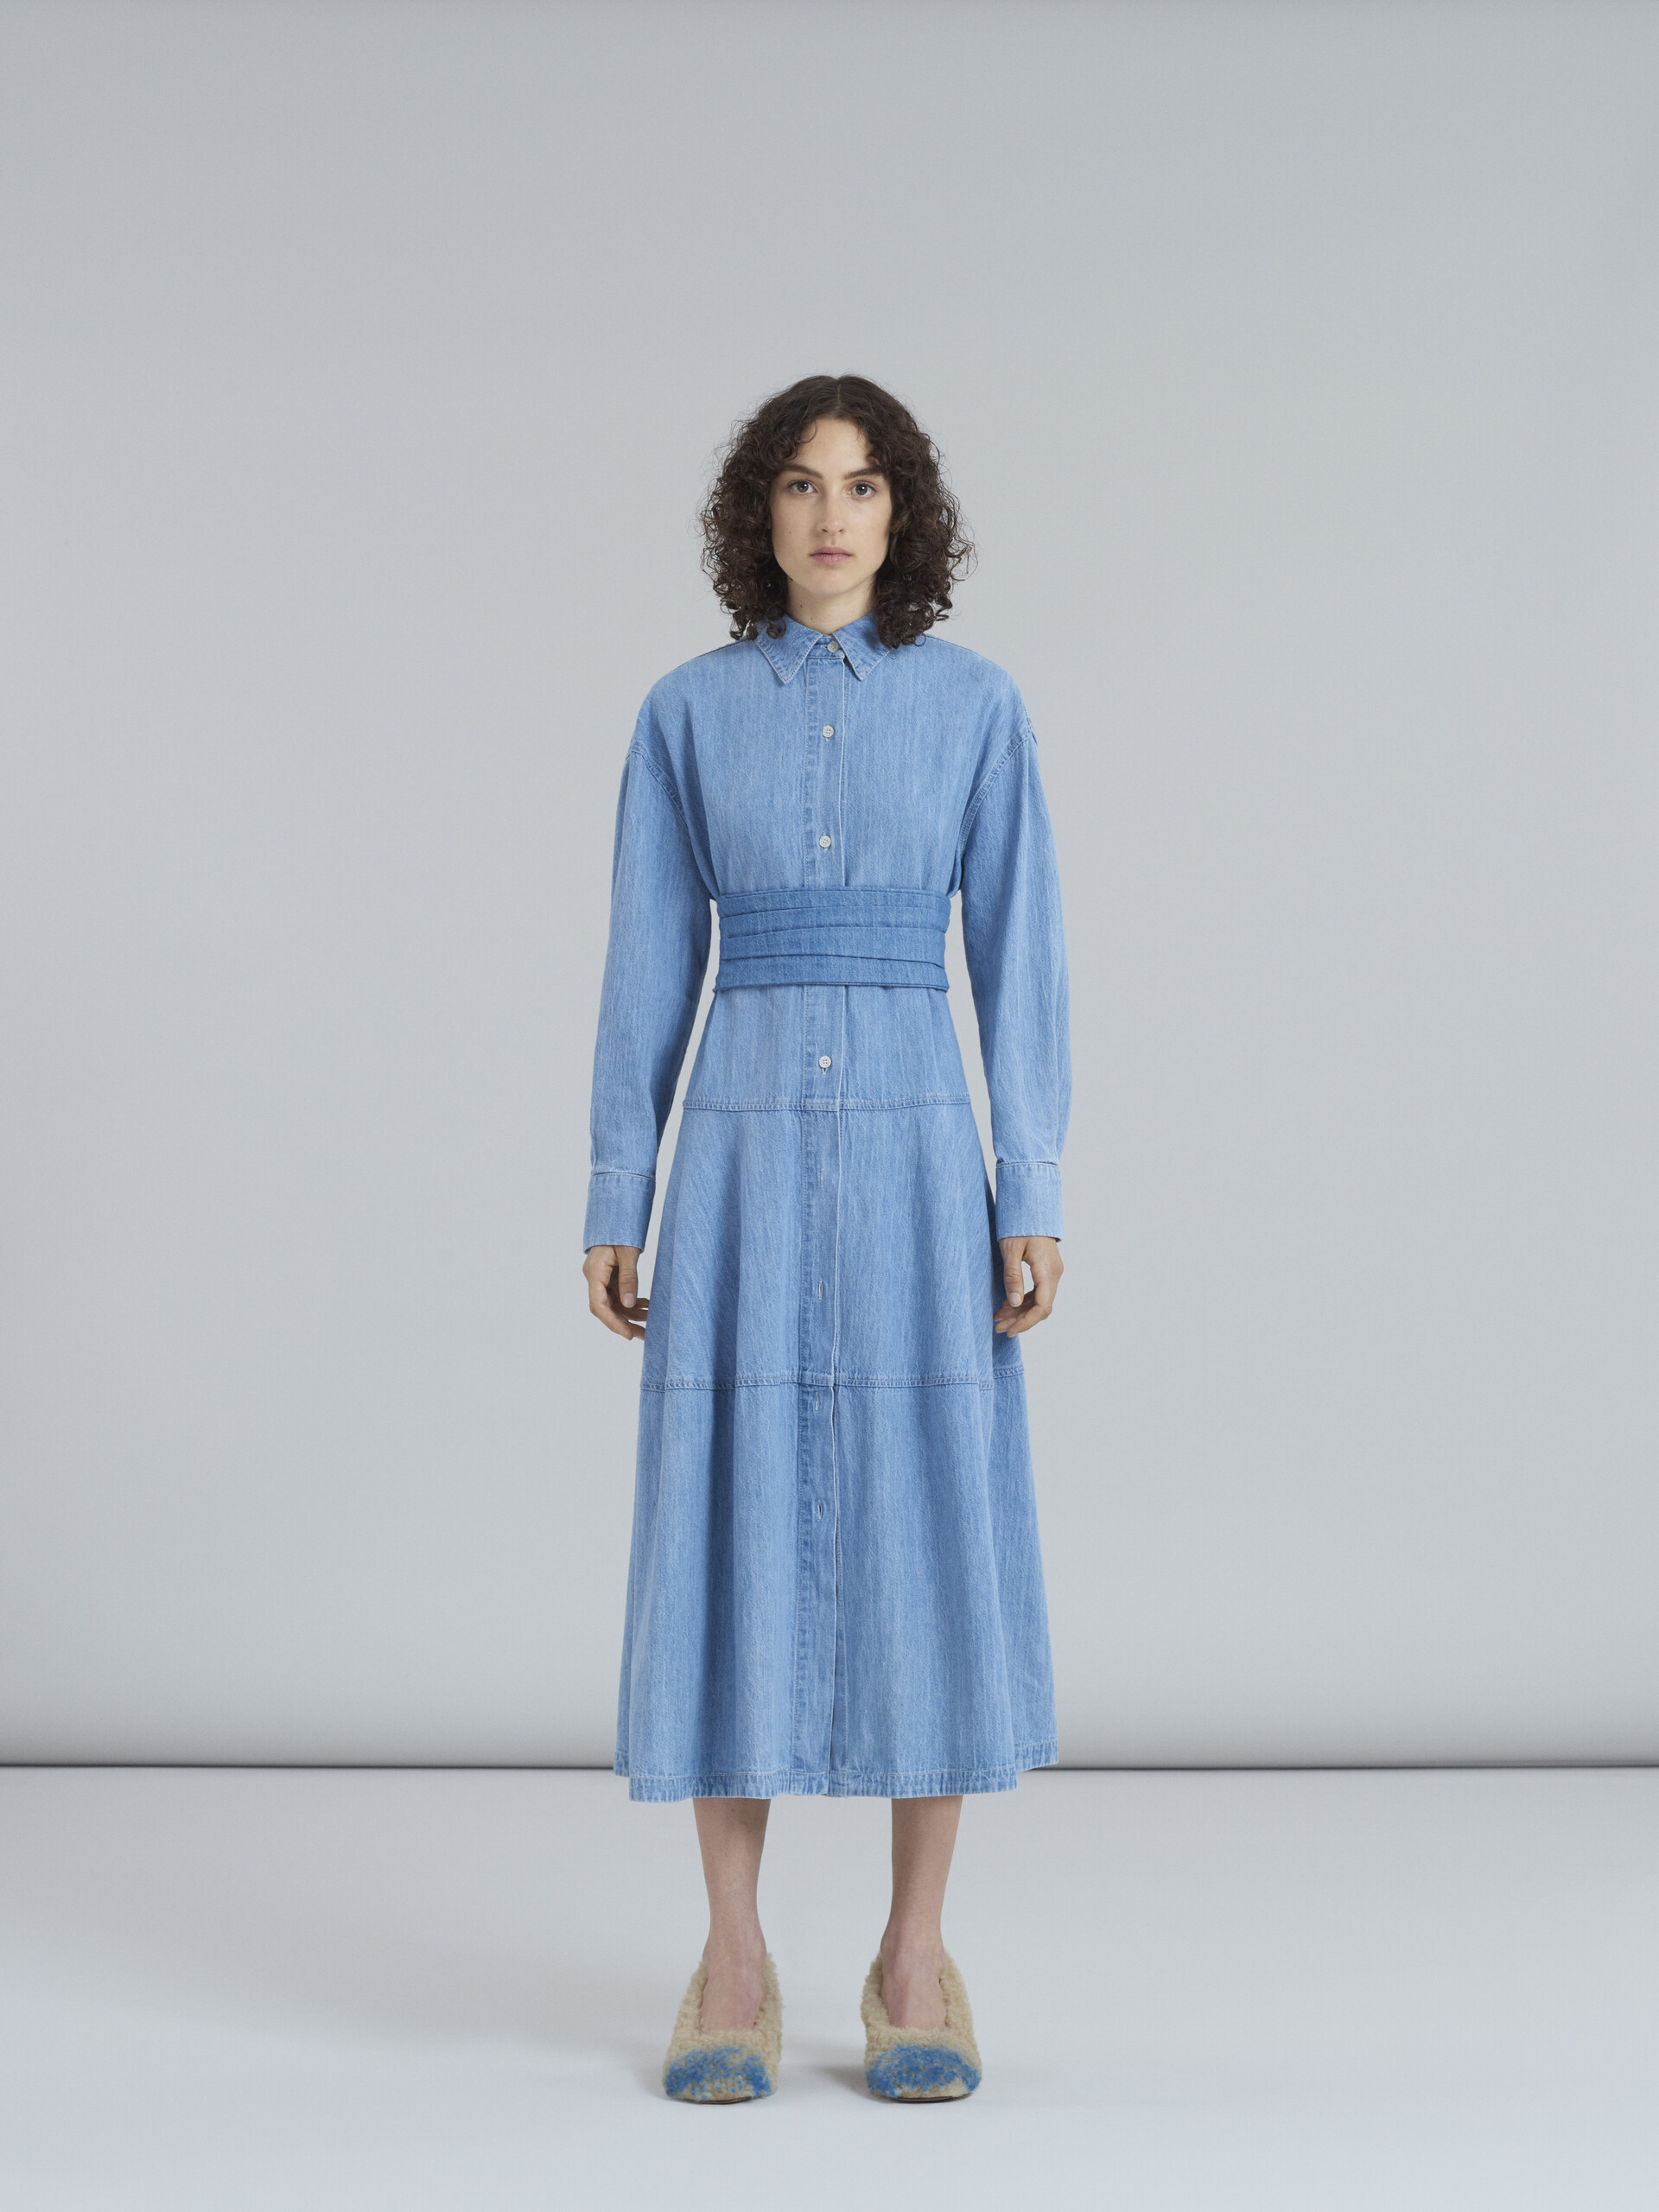 Chambray denim chemisier dress with removable smock stitch belt - Dresses - Image 2